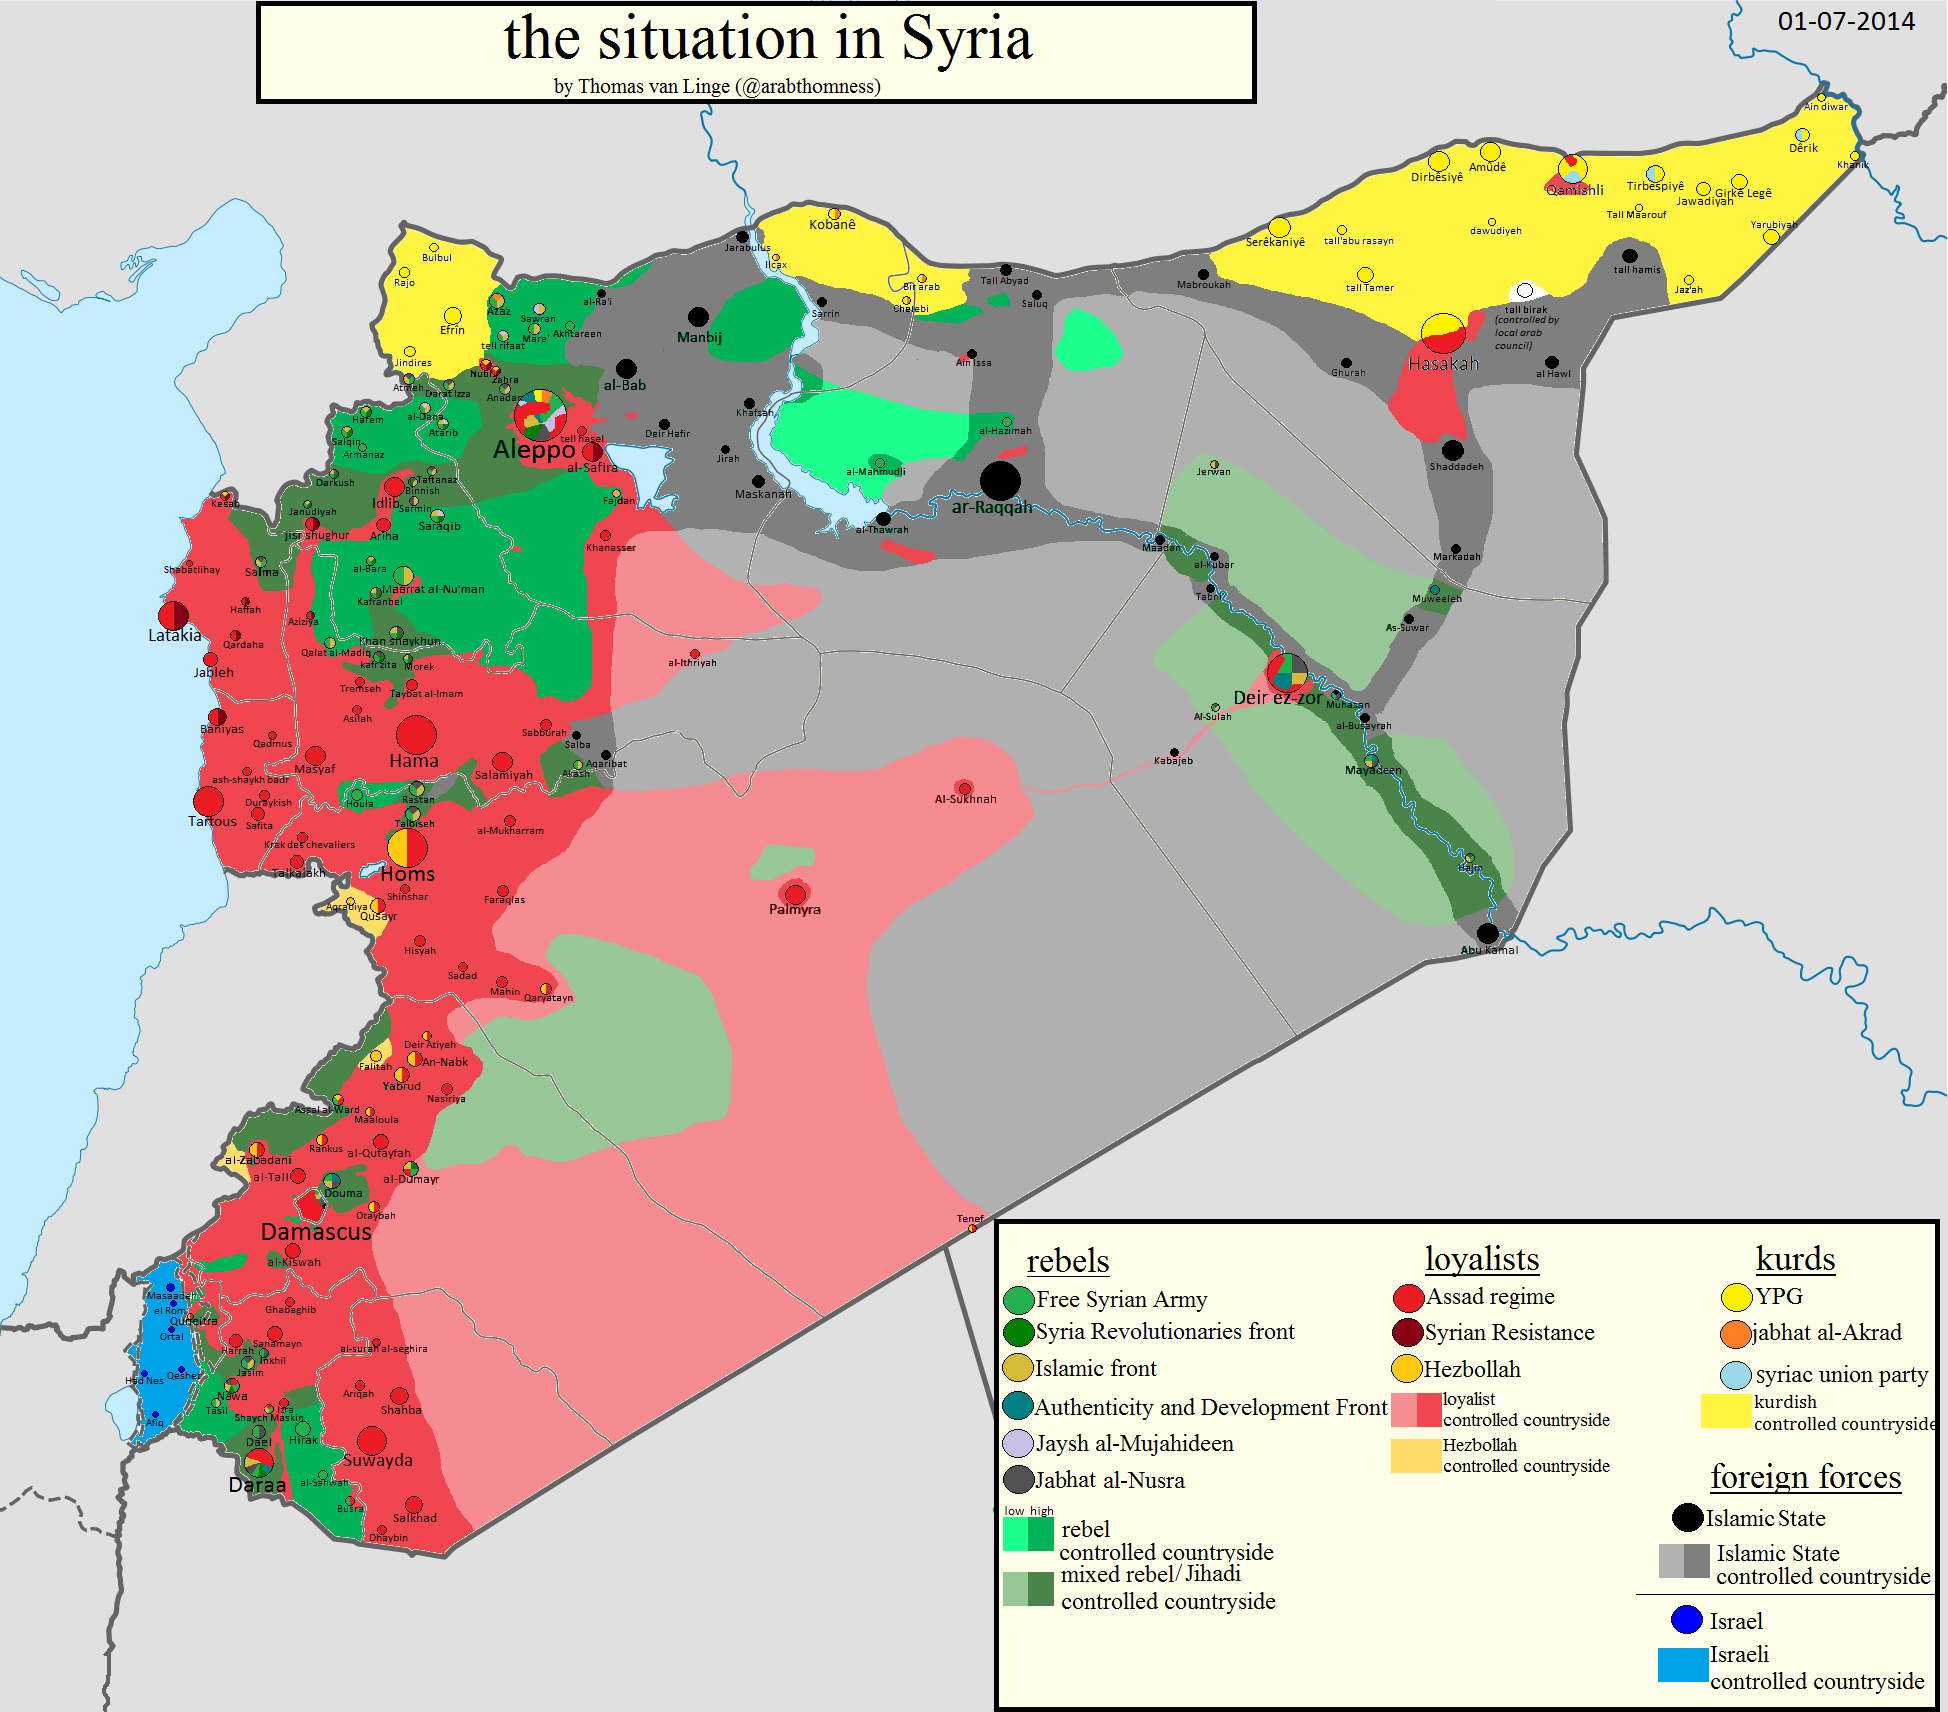 http://www.les-crises.fr/wp-content/uploads/2015/10/23-syrie-07-2014.png